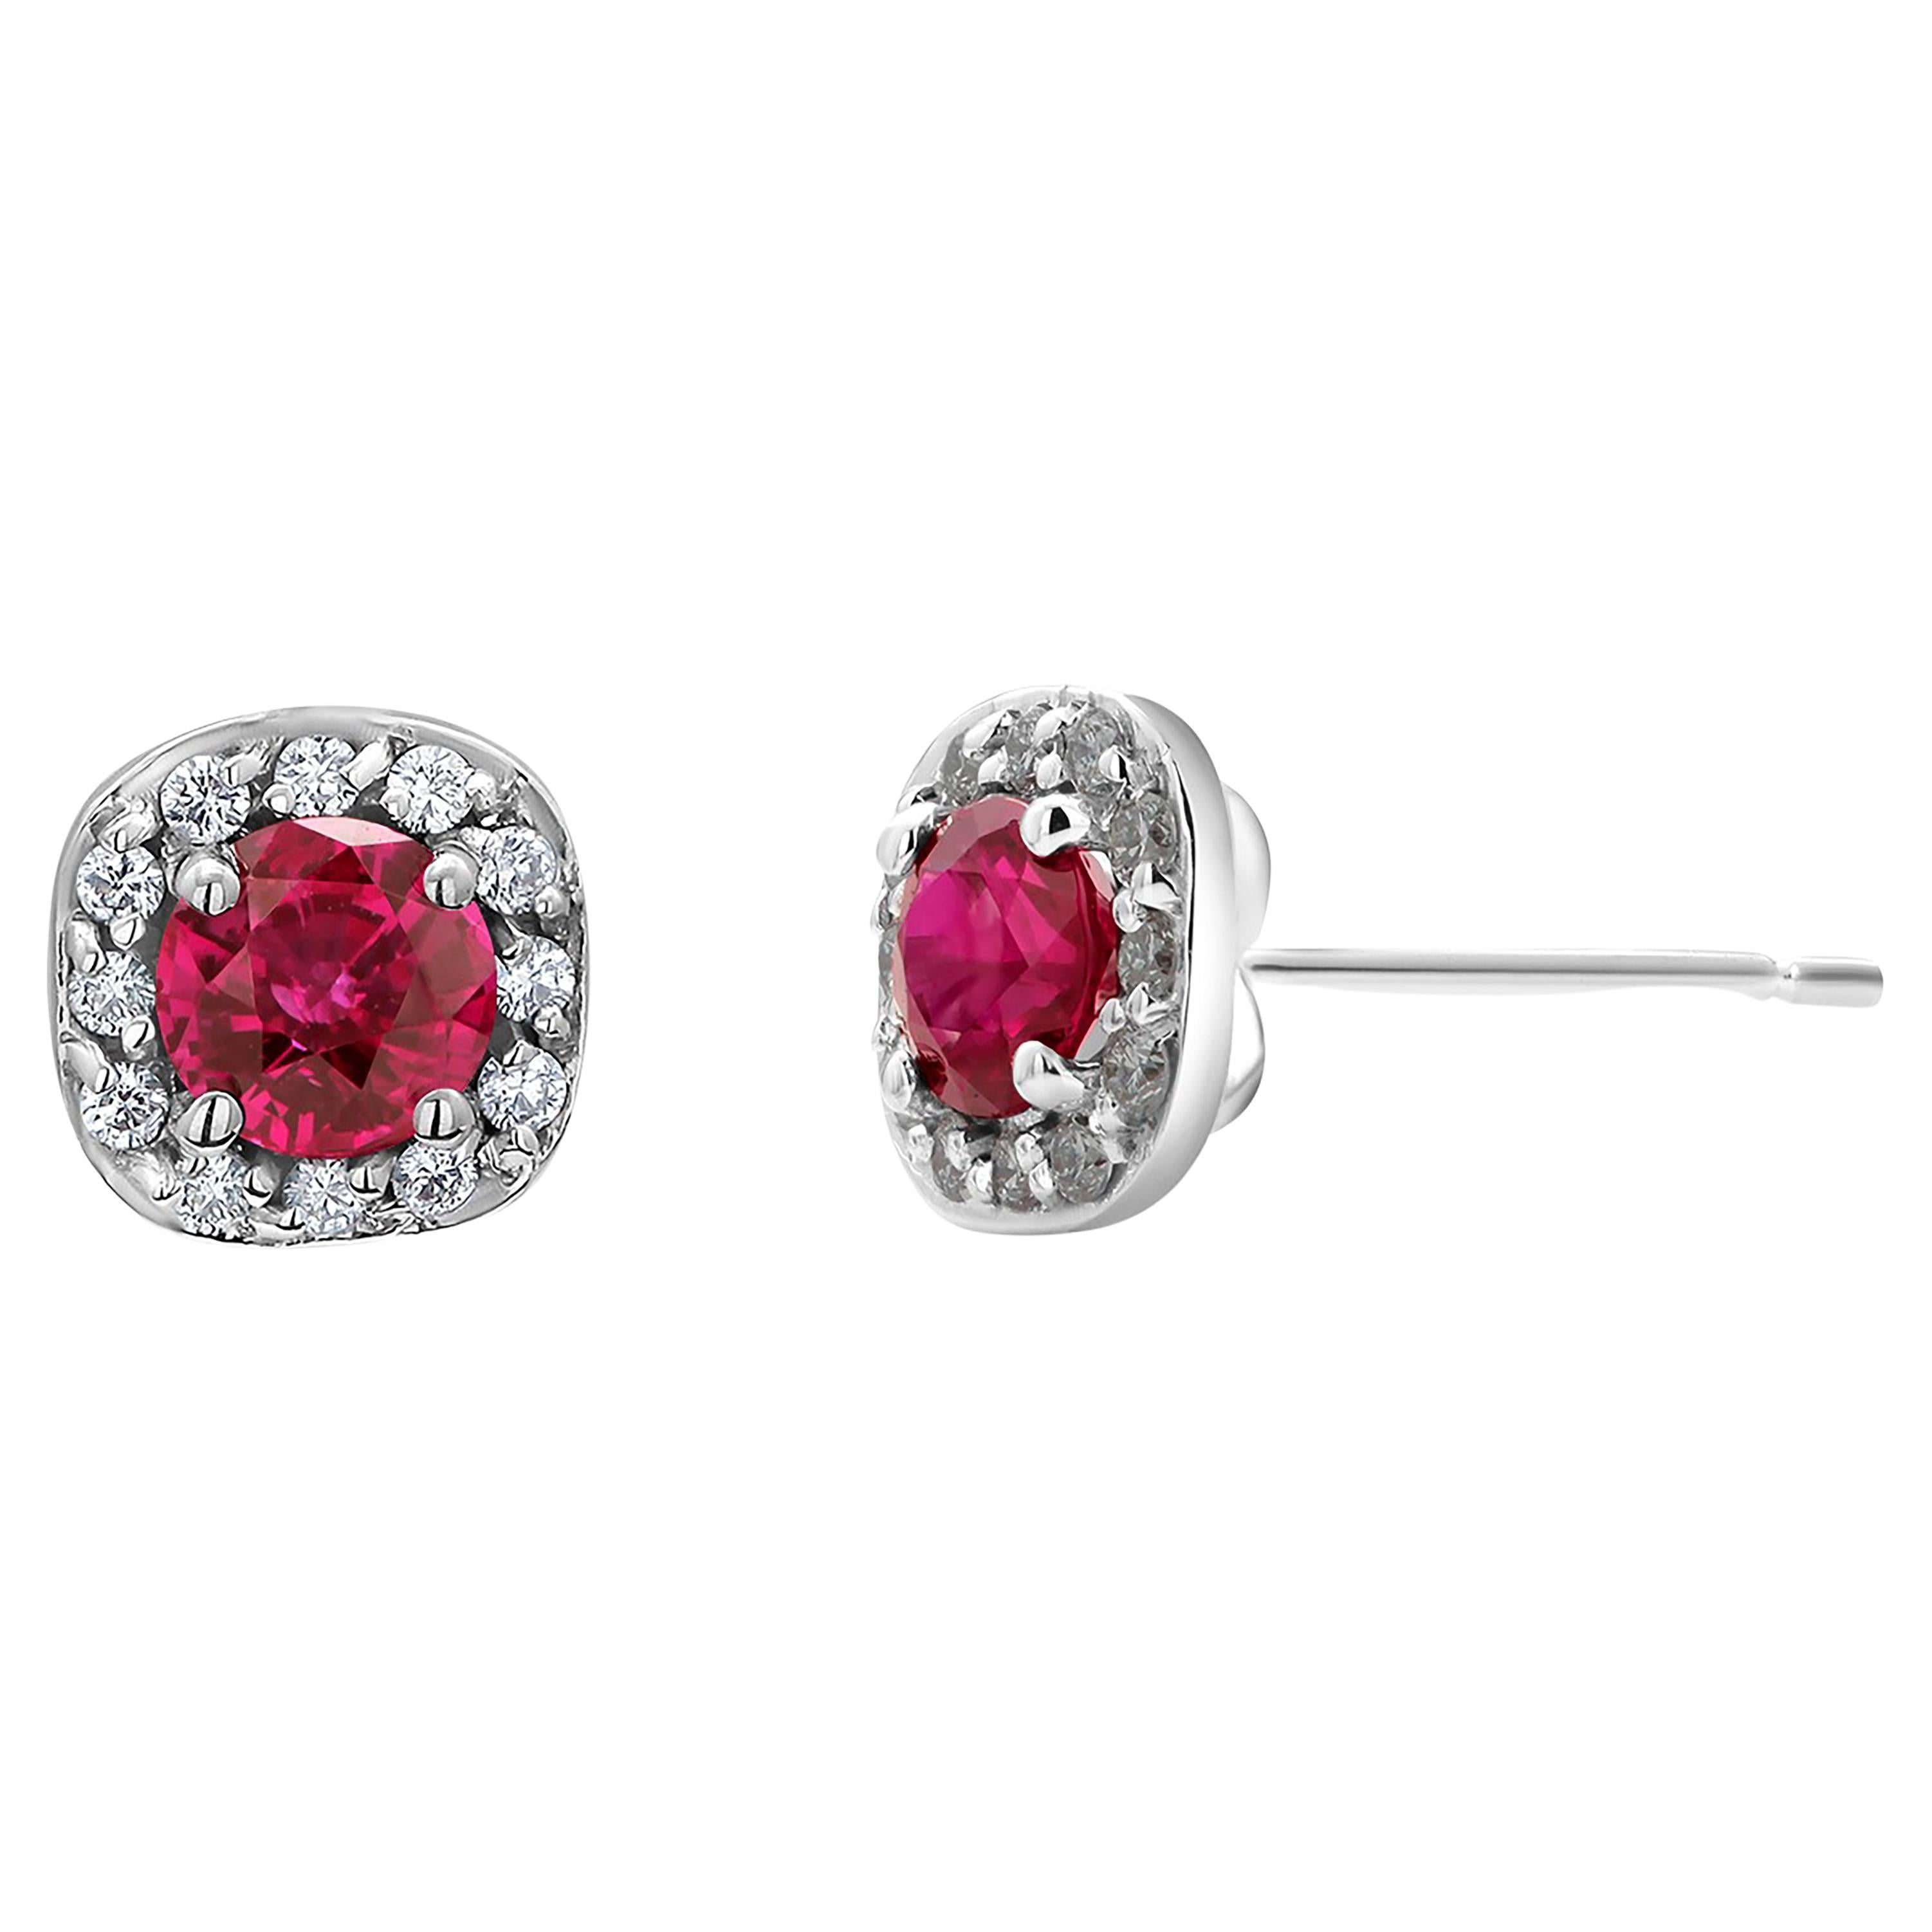 Burma Ruby and Diamond 1.35 Carat White Gold Square Shaped Halo Stud Earrings